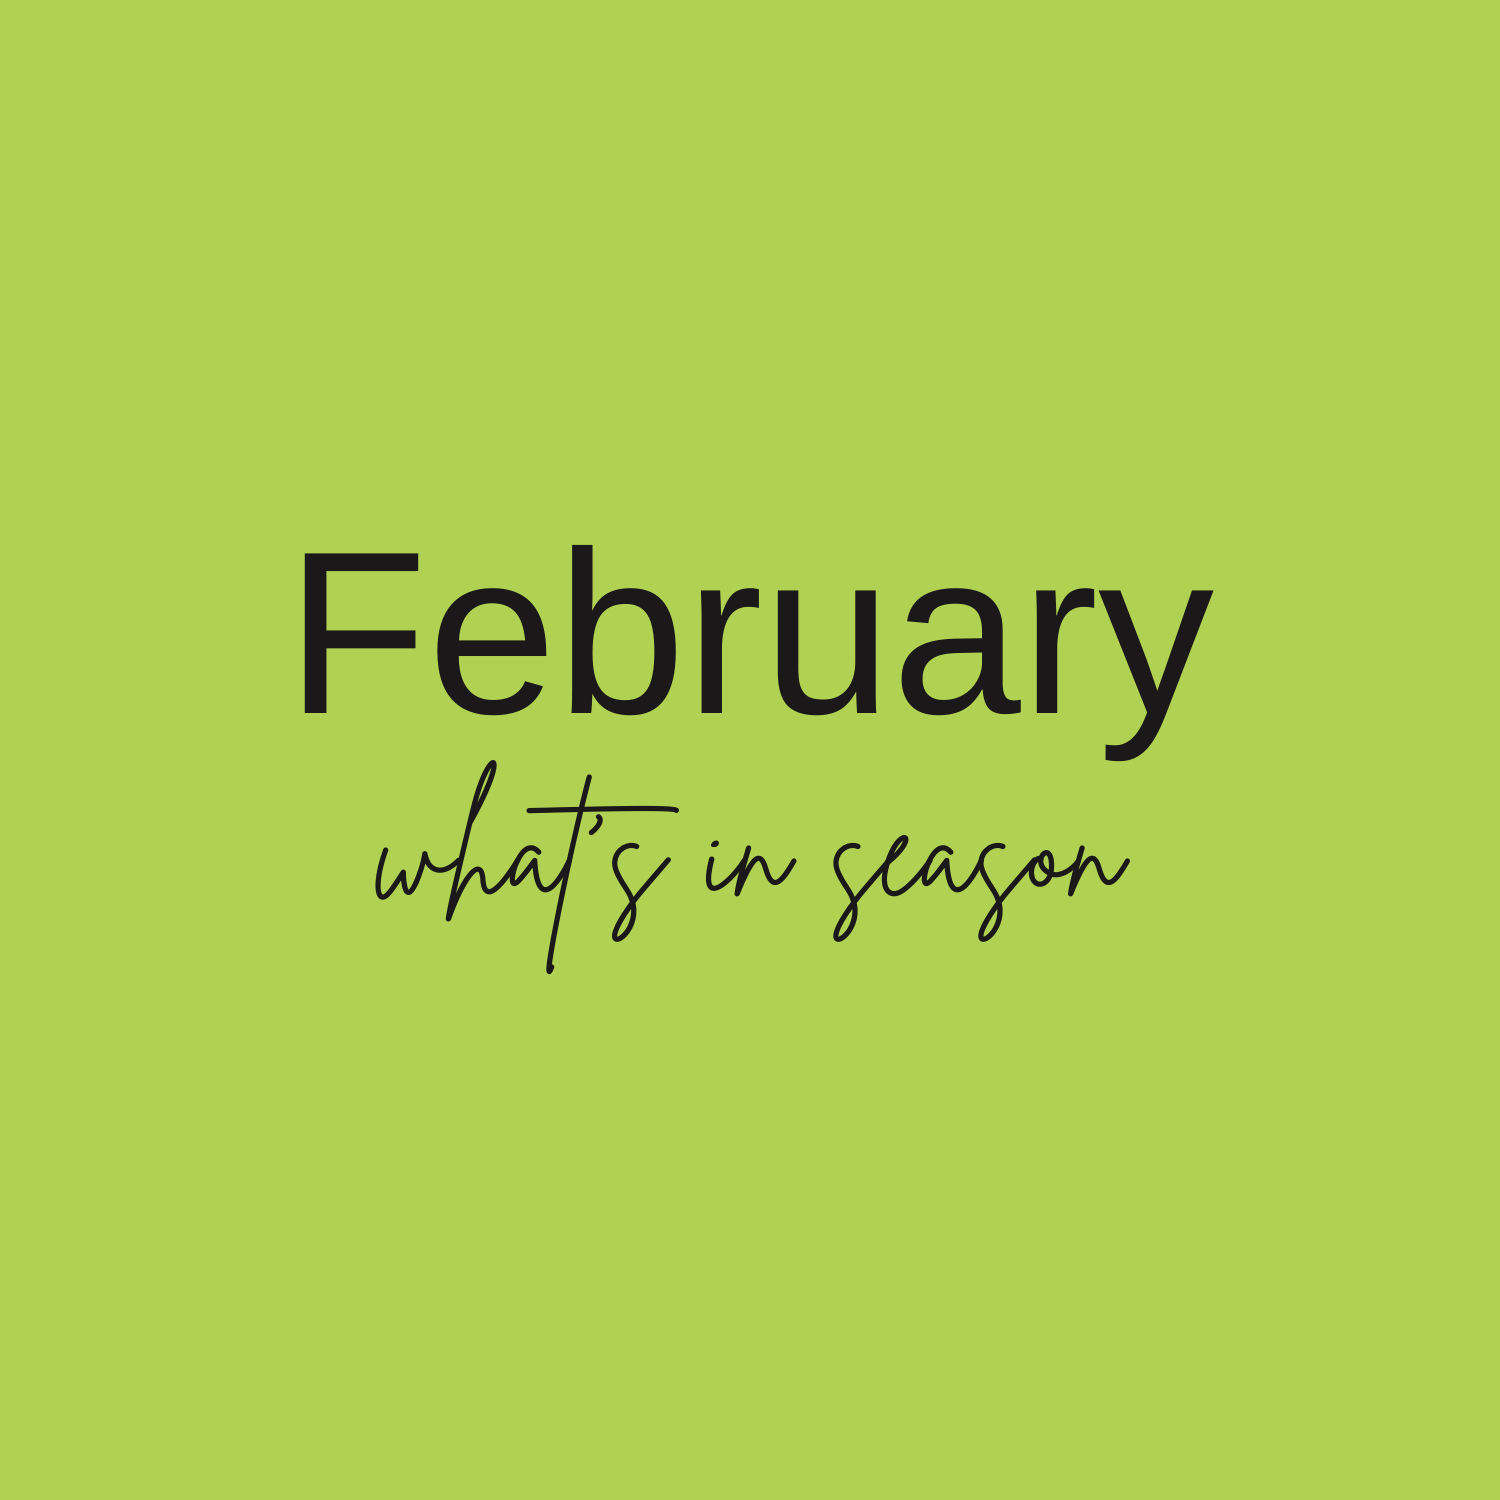 -What’s in Season in February?